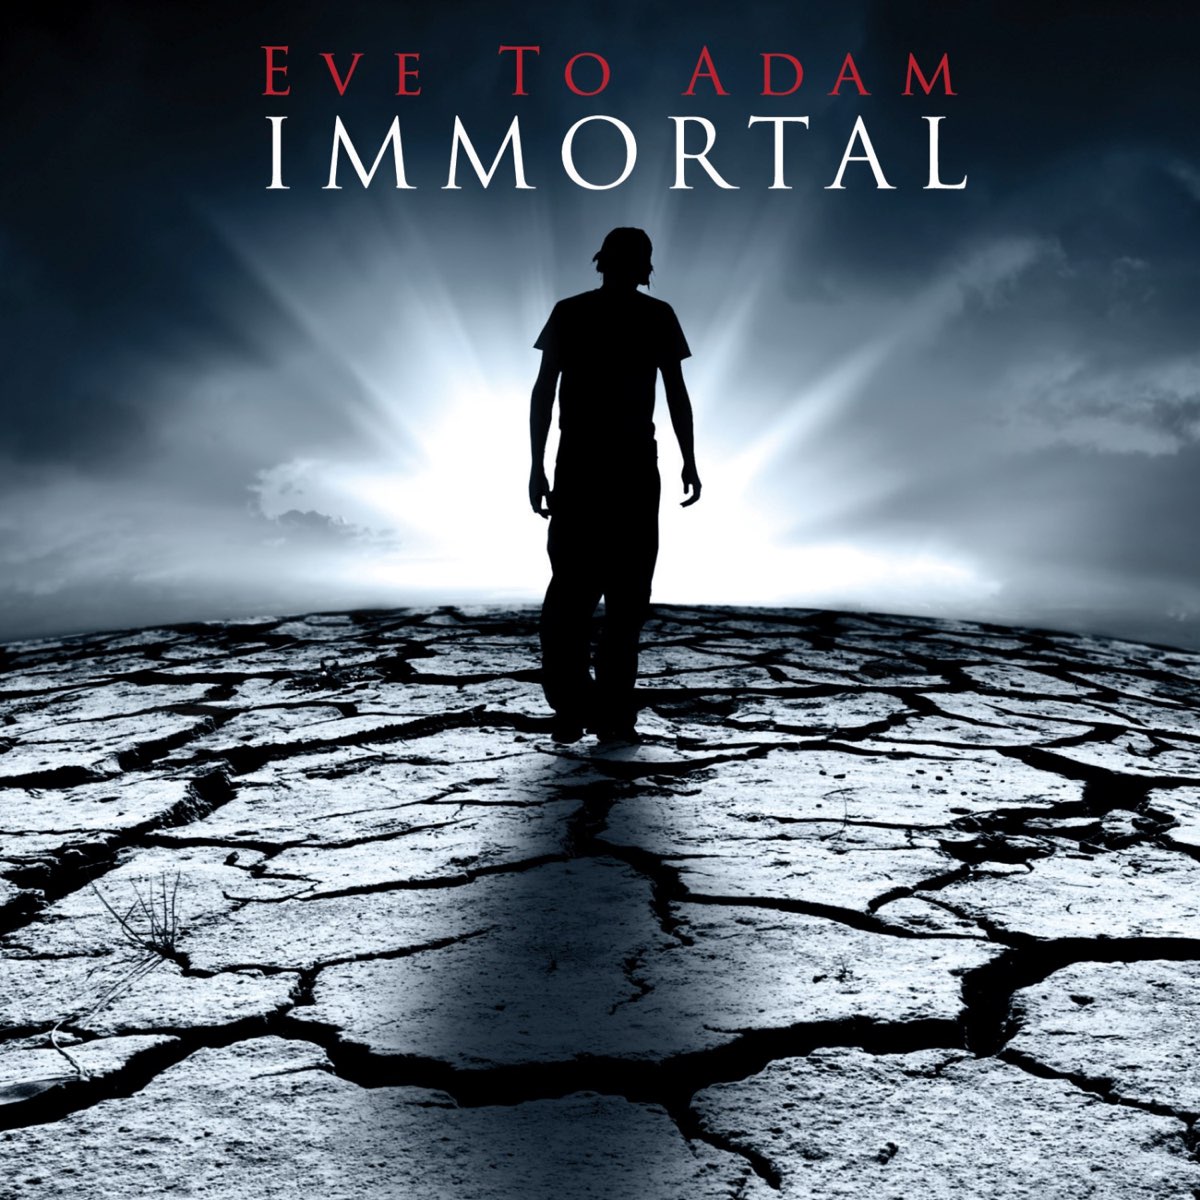 Immortal - Single - Album by Eve to Adam - Apple Music